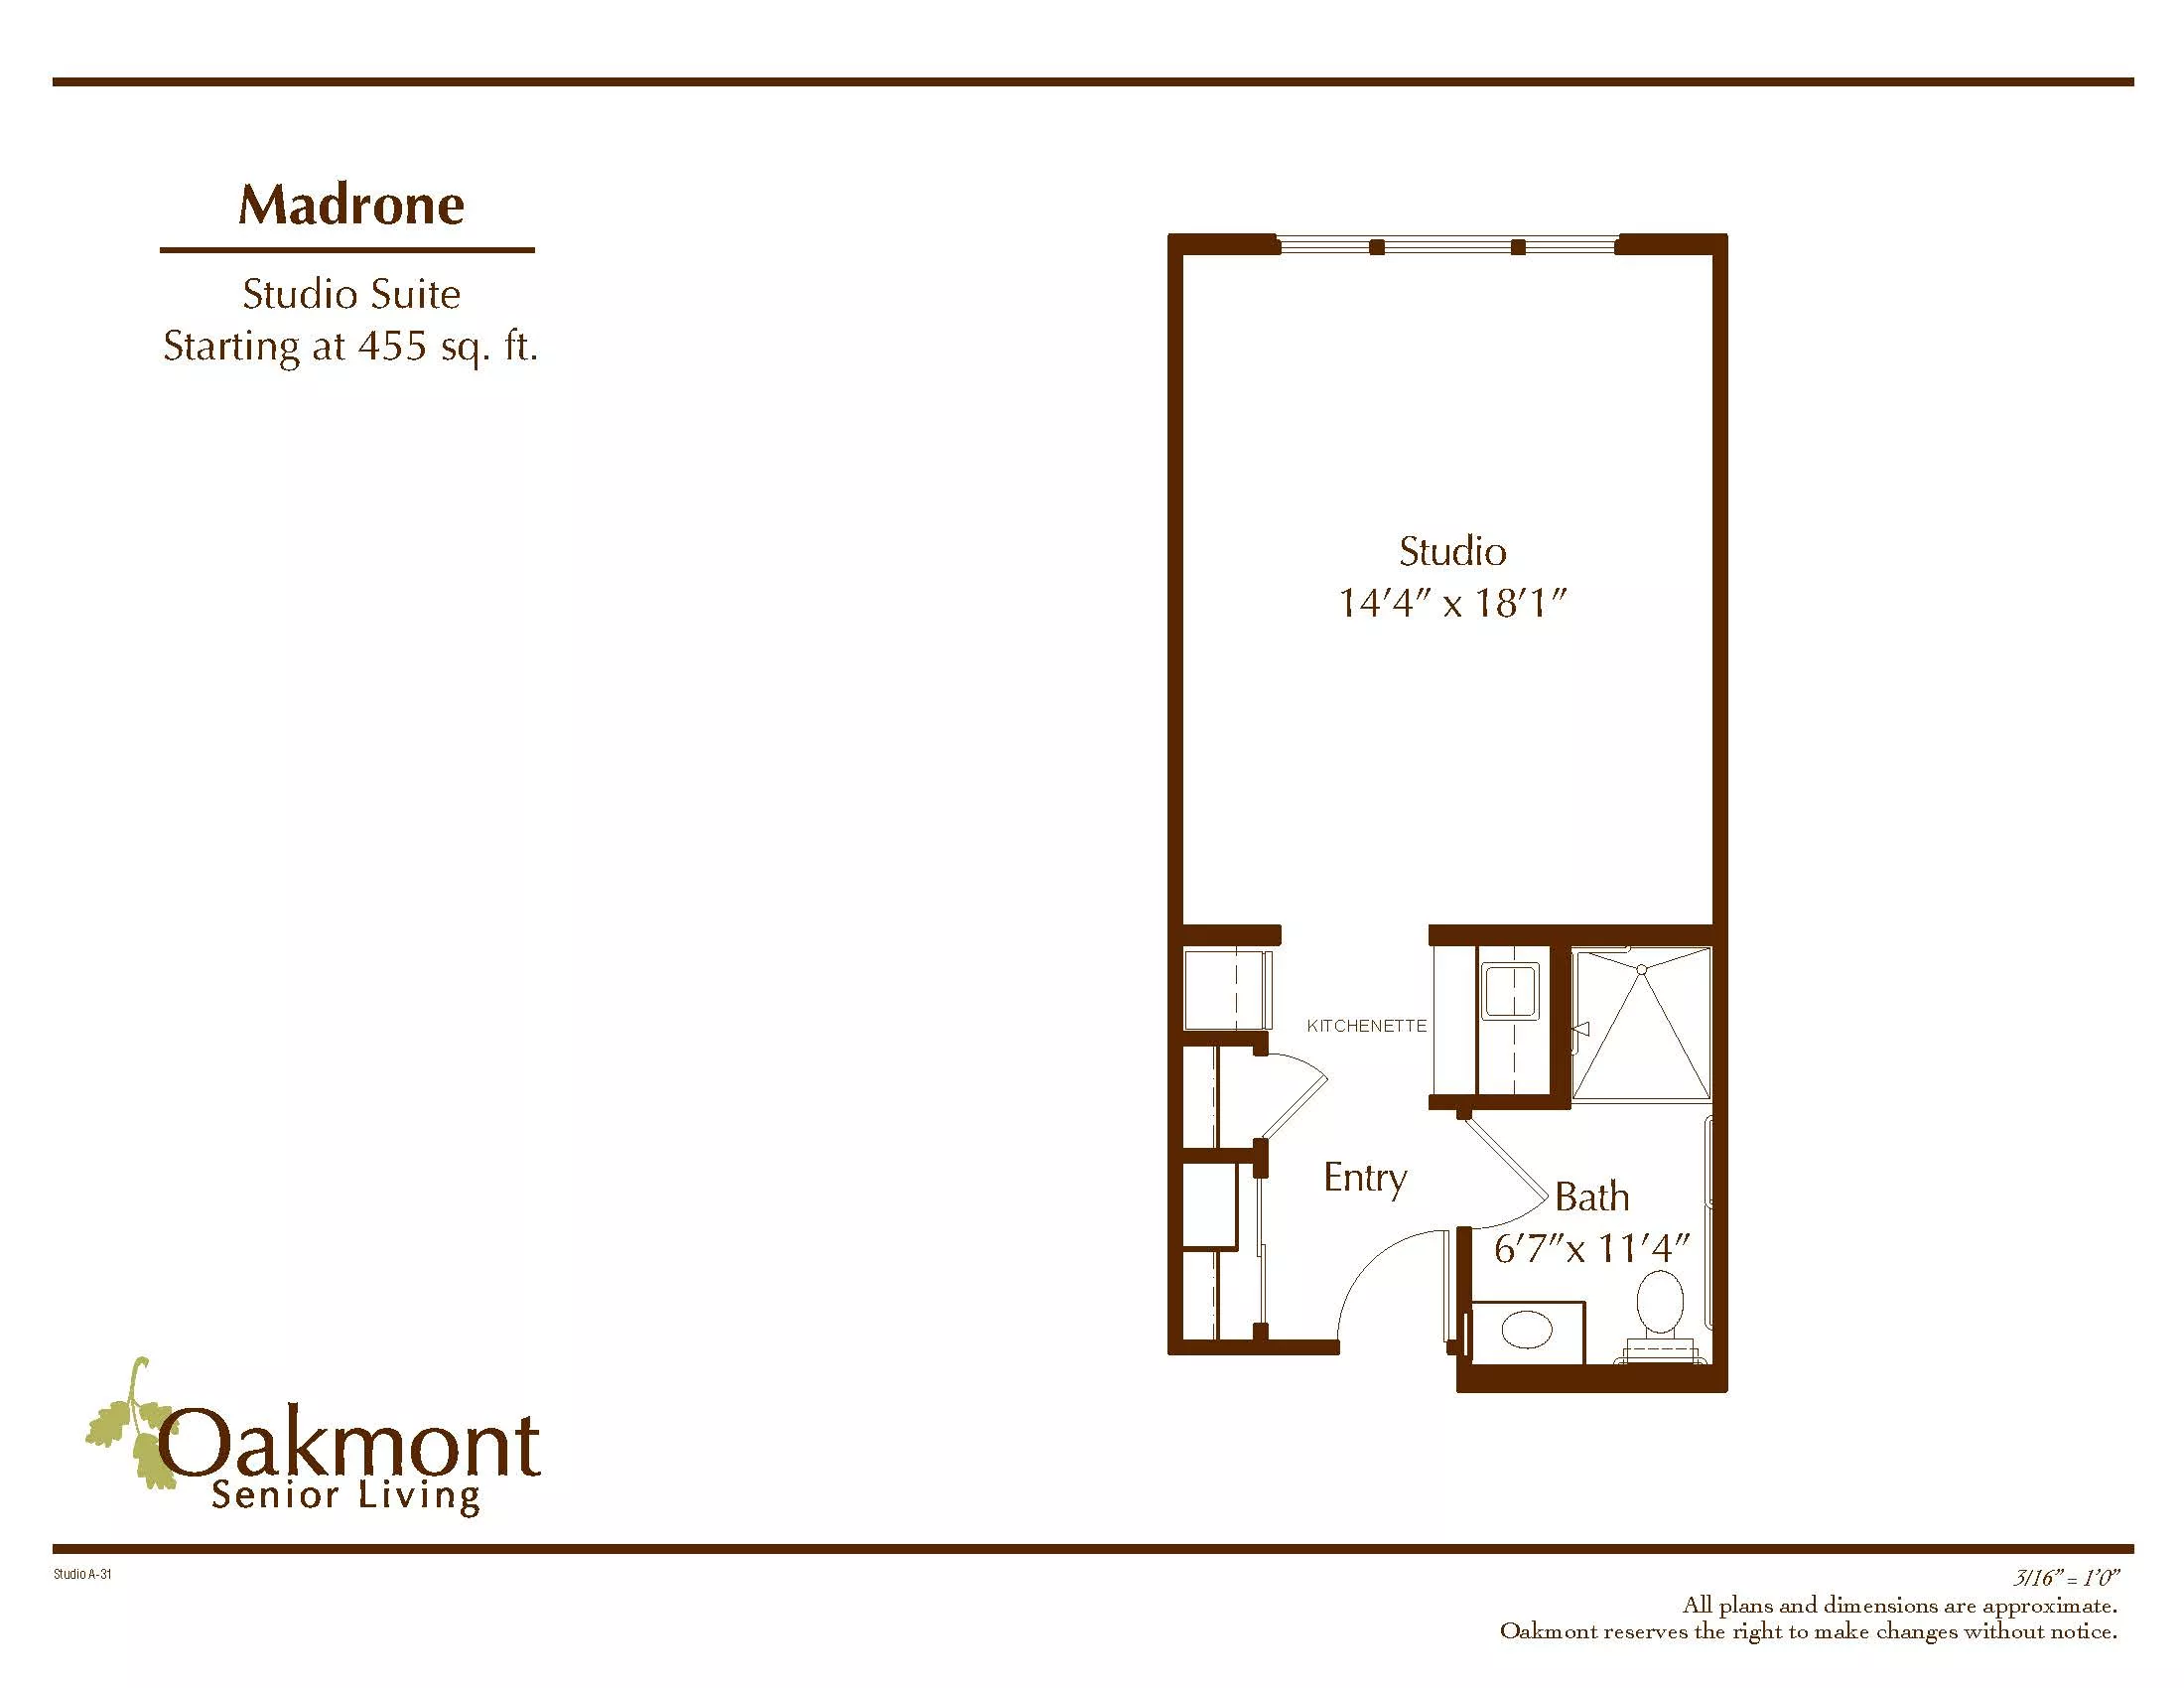 Madrone floor plan